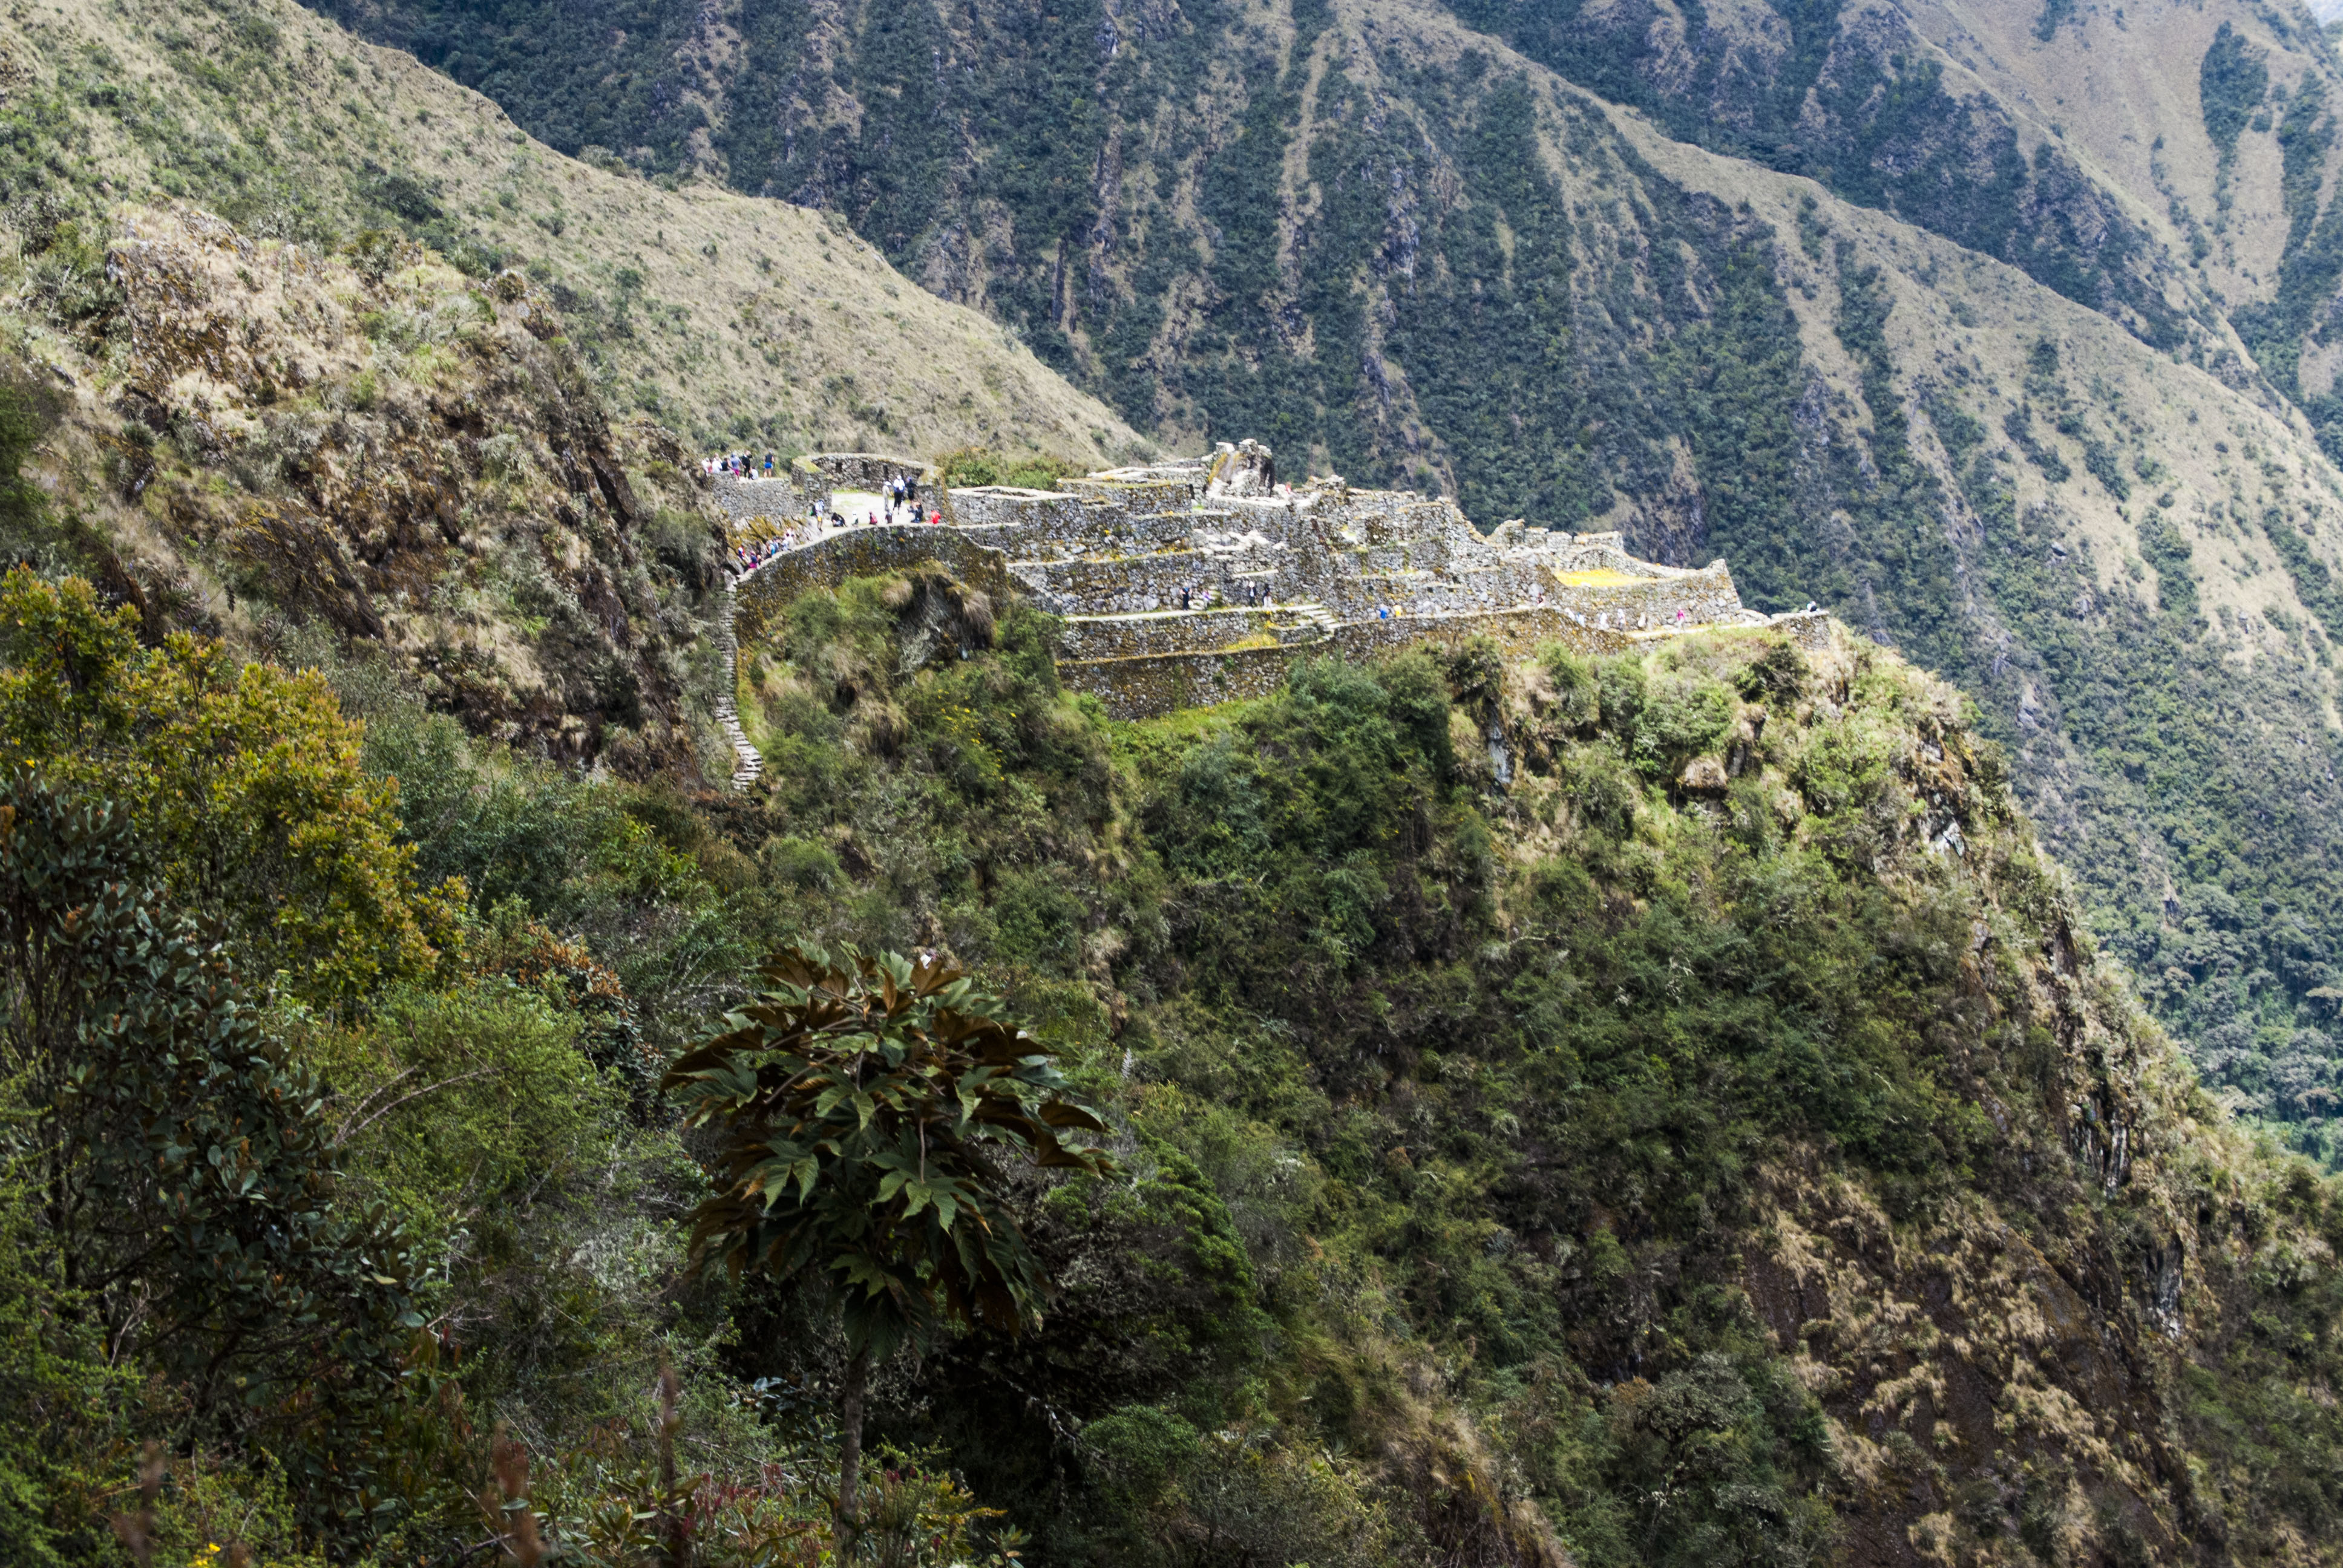 Ruins along the Inca Trail